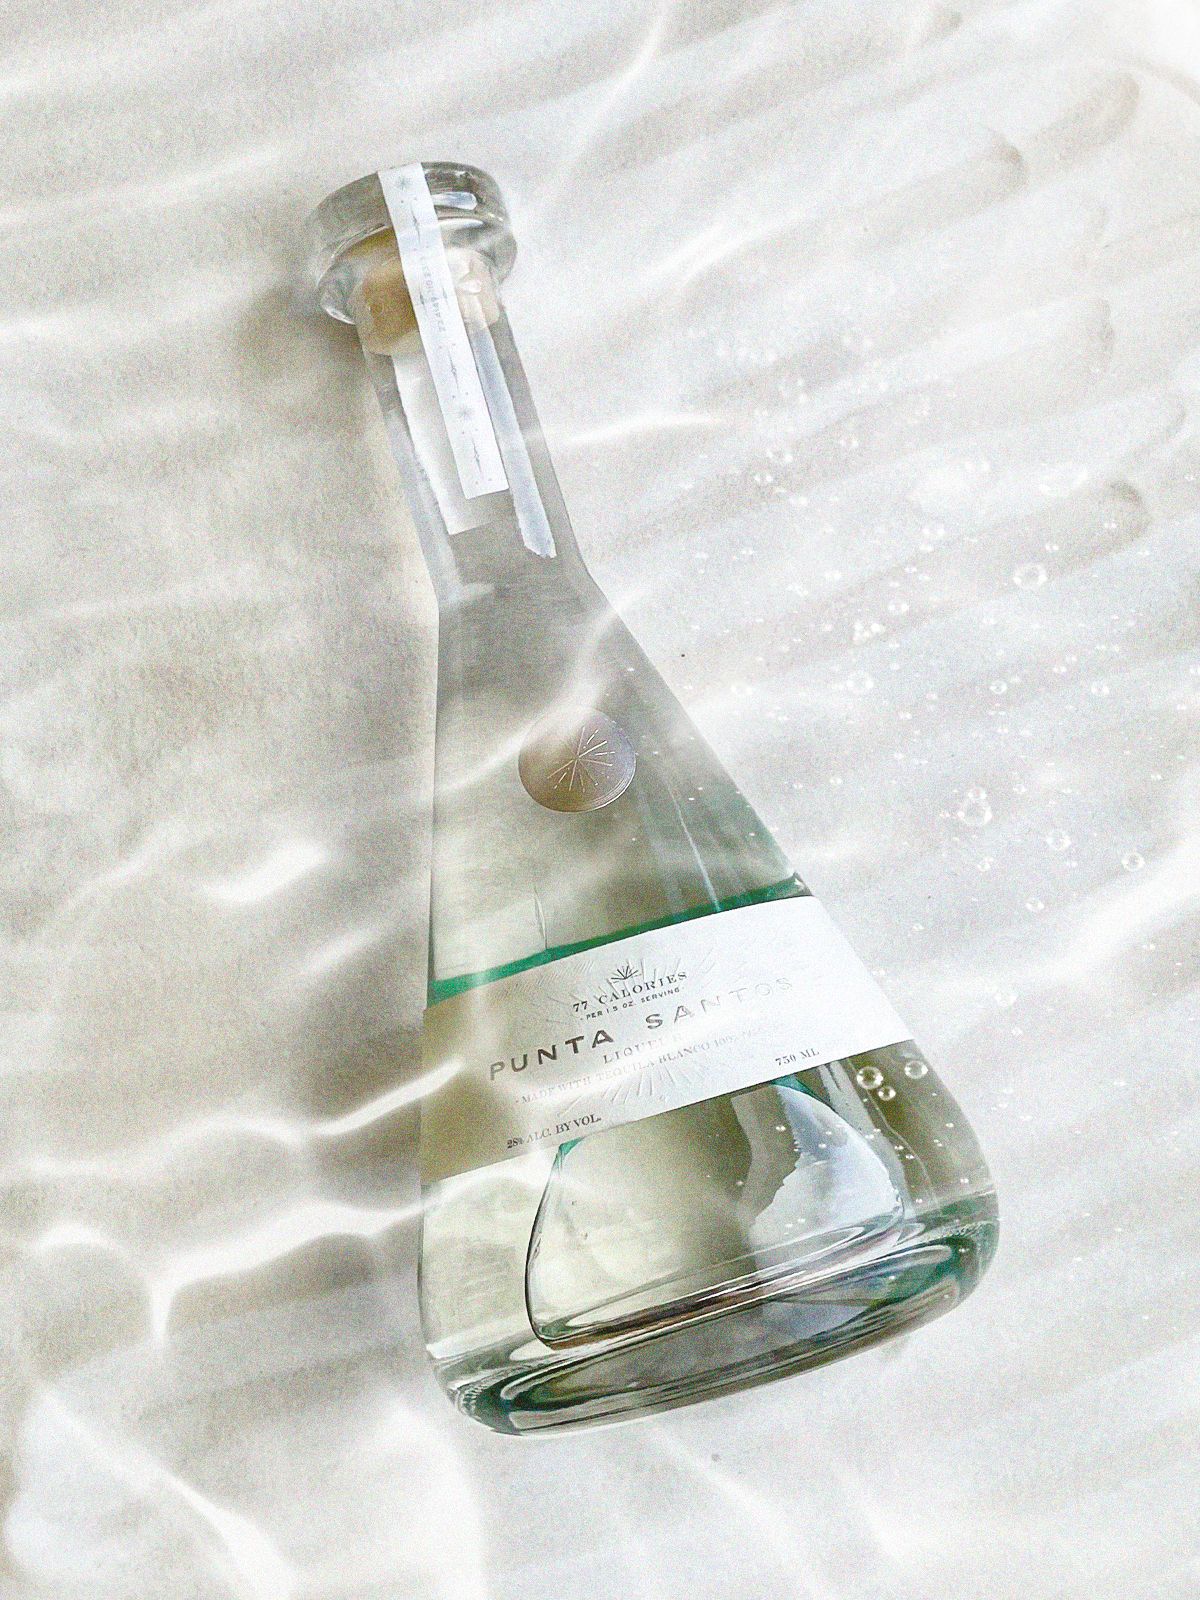 Punta Santos Top Shelf Tequila - New Premium Tequila Bottle - !00% Agave Azul